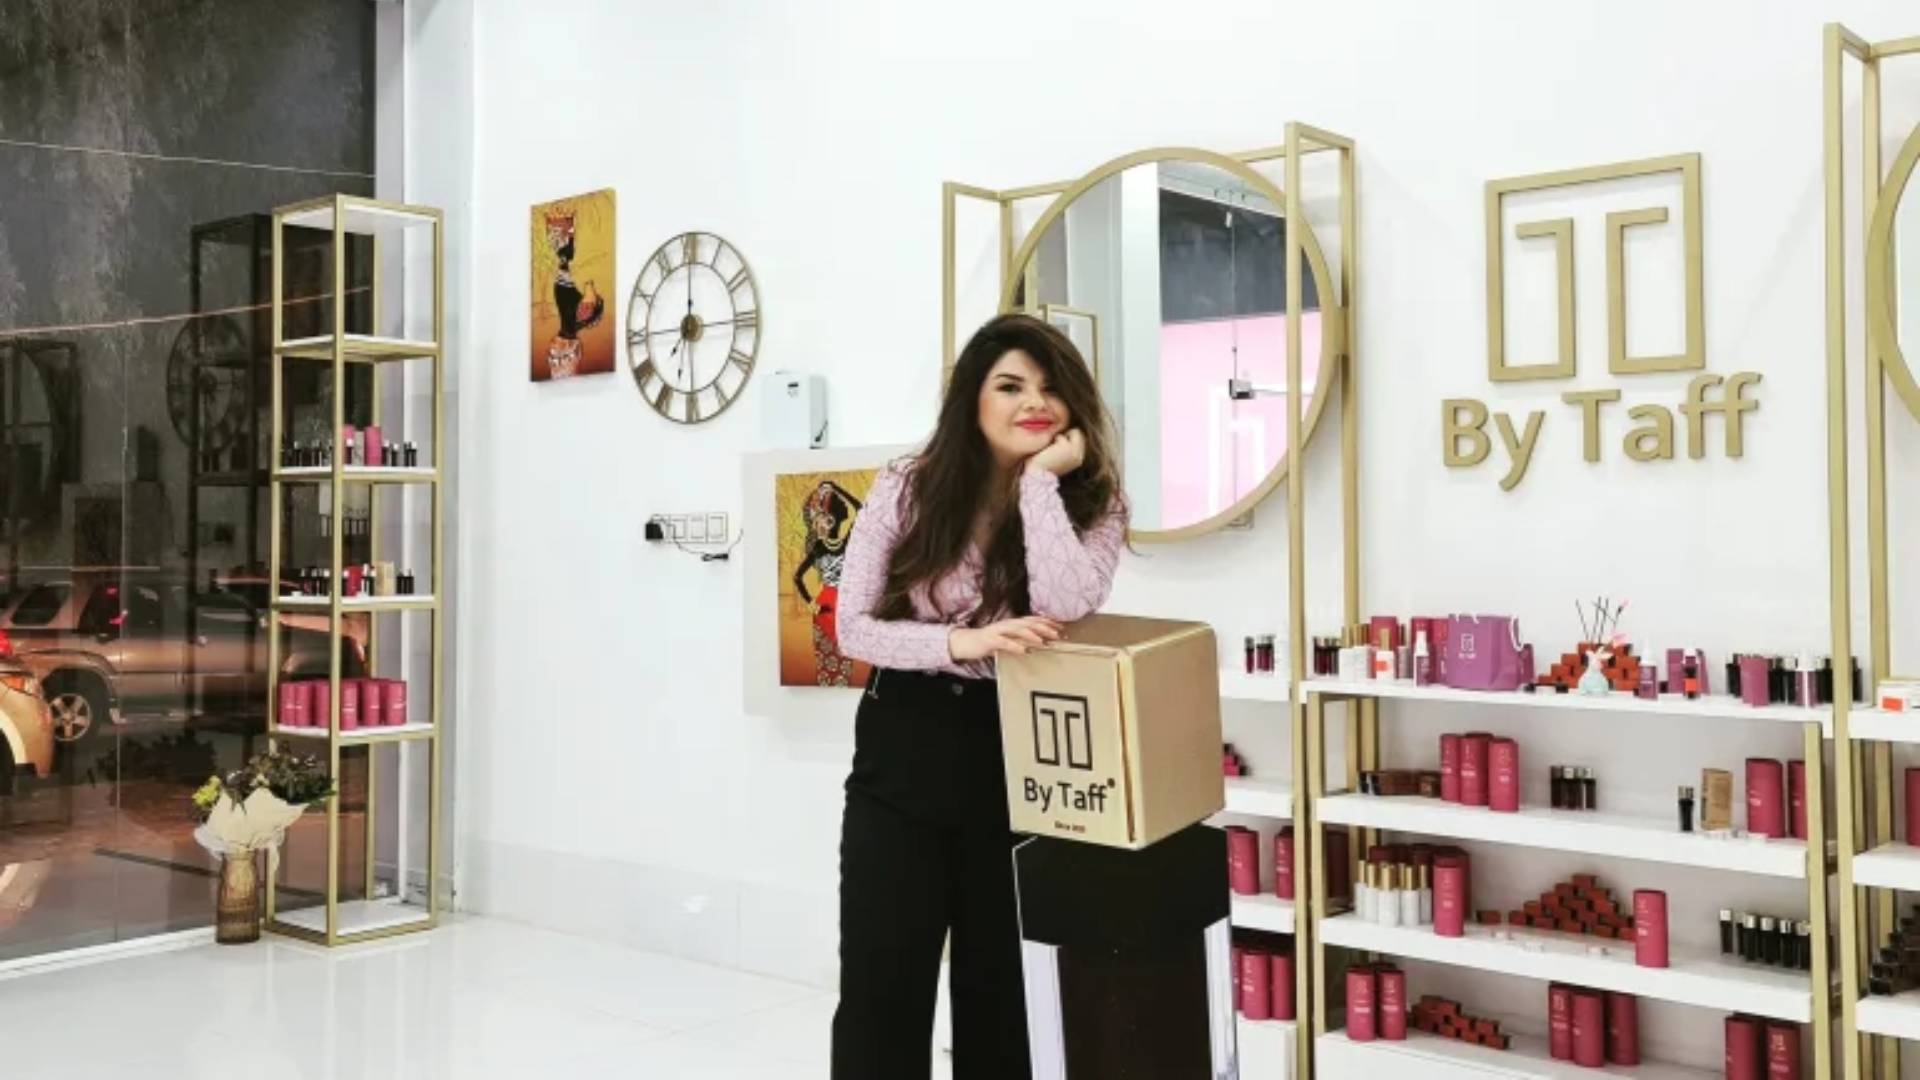  Taffan Hamakhan's cosmetics business 'ByTaff' employs women in an effort to reduce female unemployment [Courtesy of Taffan Hamakhan] (Photo / Al Jazeera